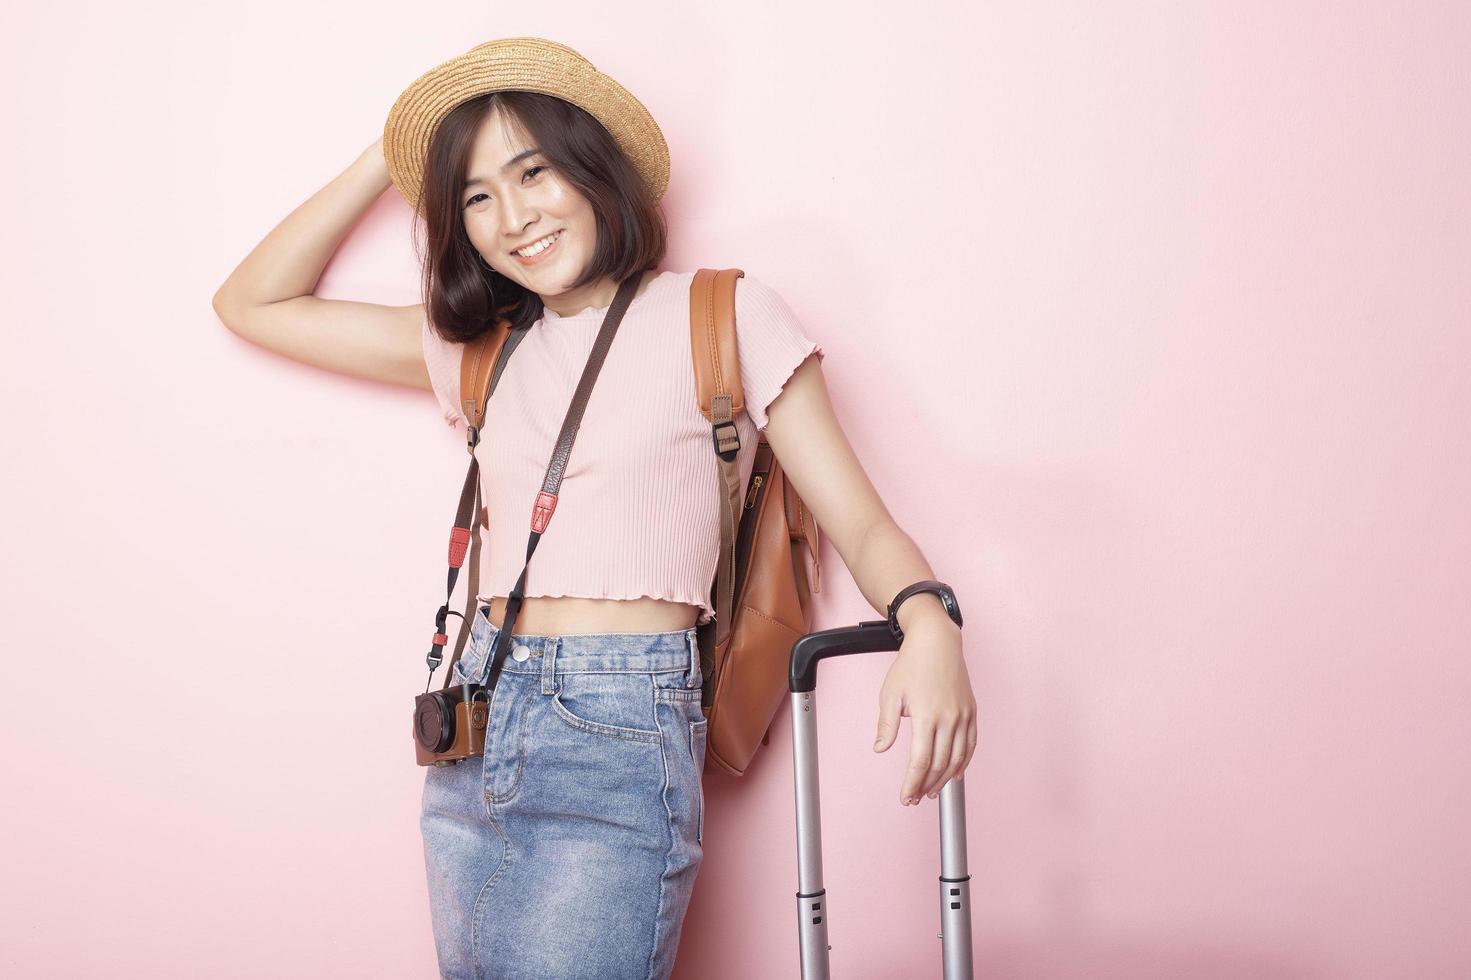 gelukkige aziatische vrouwentoerist op roze achtergrond foto